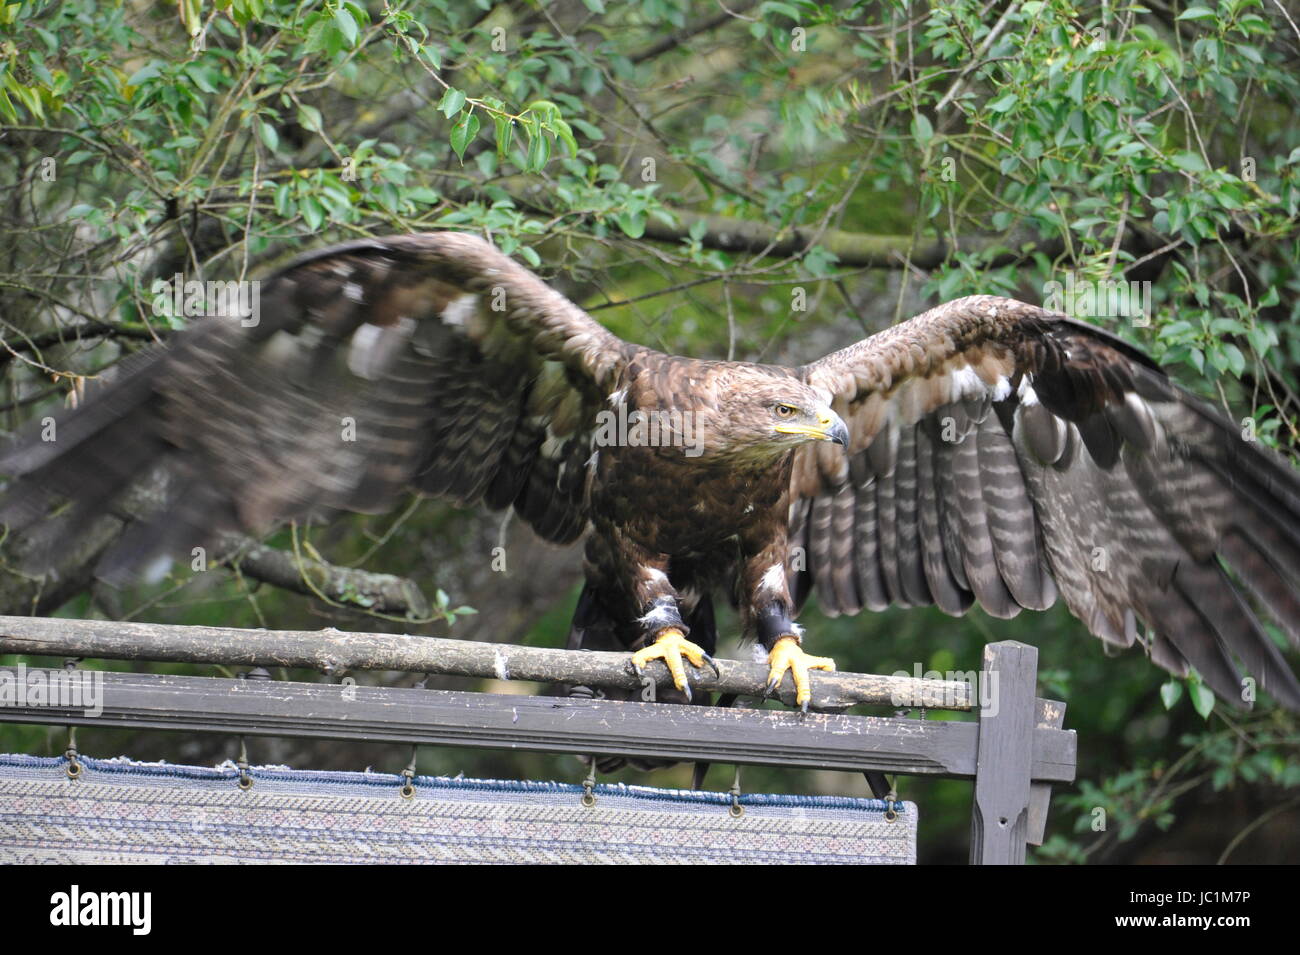 The golden eagle (Aquila chrysaetos).Falconry in Germany. Stock Photo